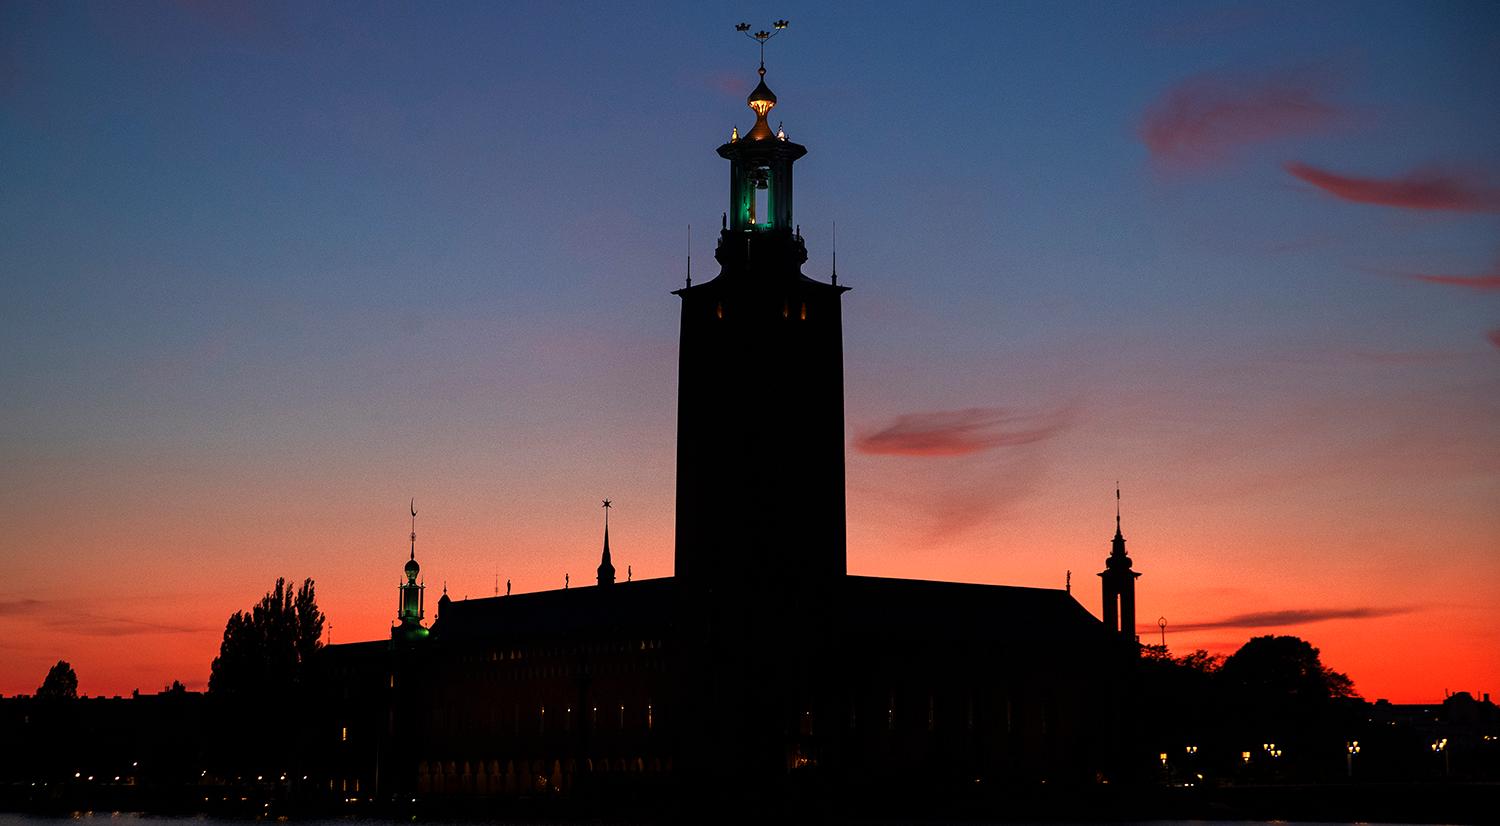 ”Landets kulturhuvudstad heter Stockholm”, skriver Kristofer Andersson.